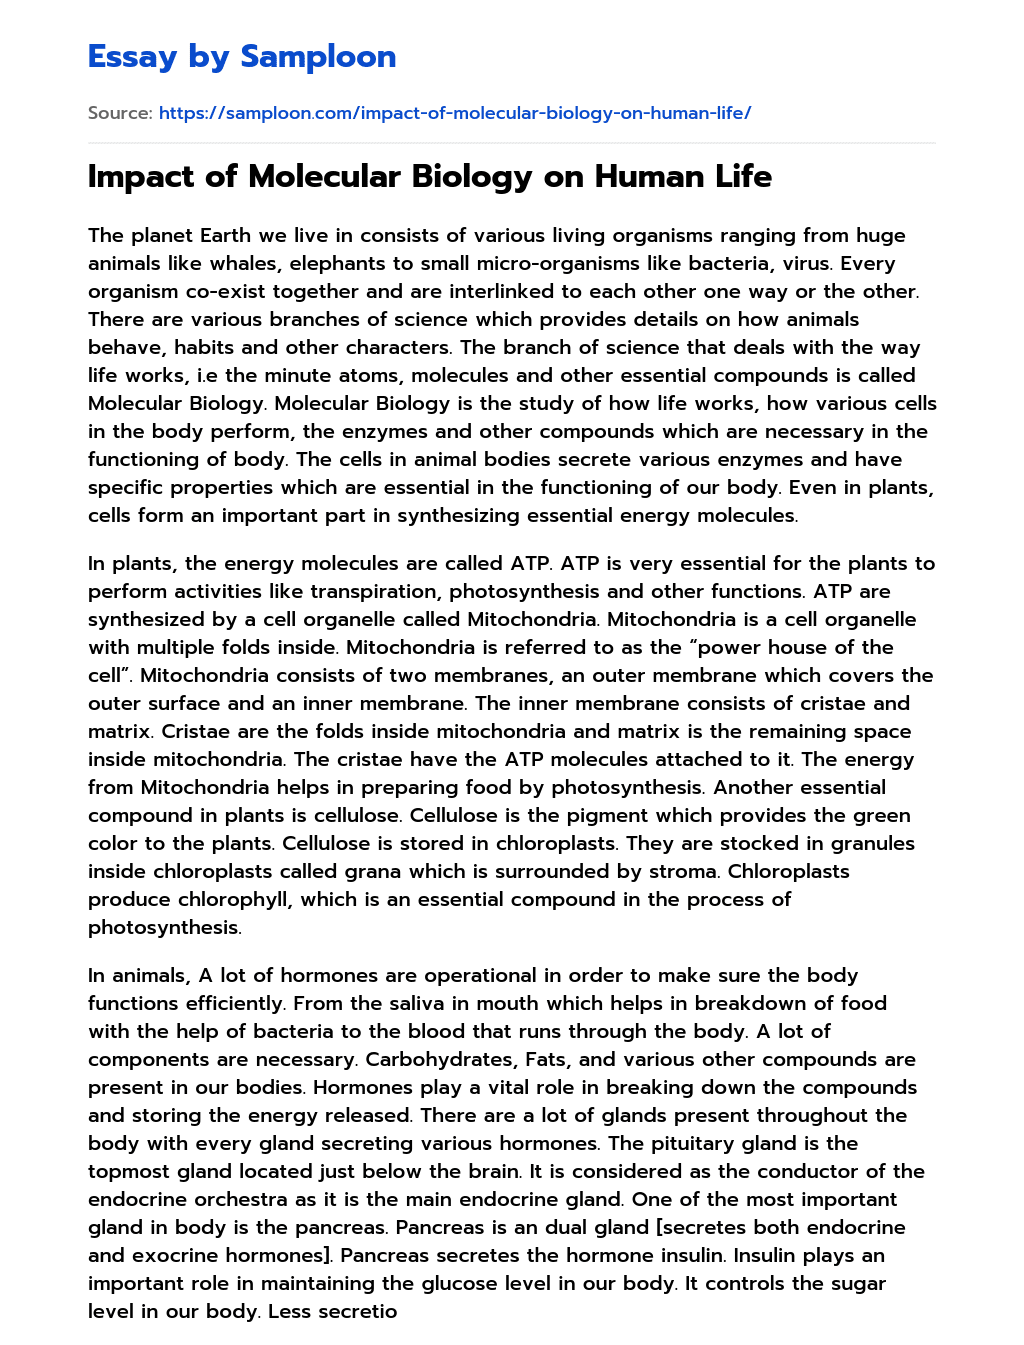 Impact of Molecular Biology on Human Life essay